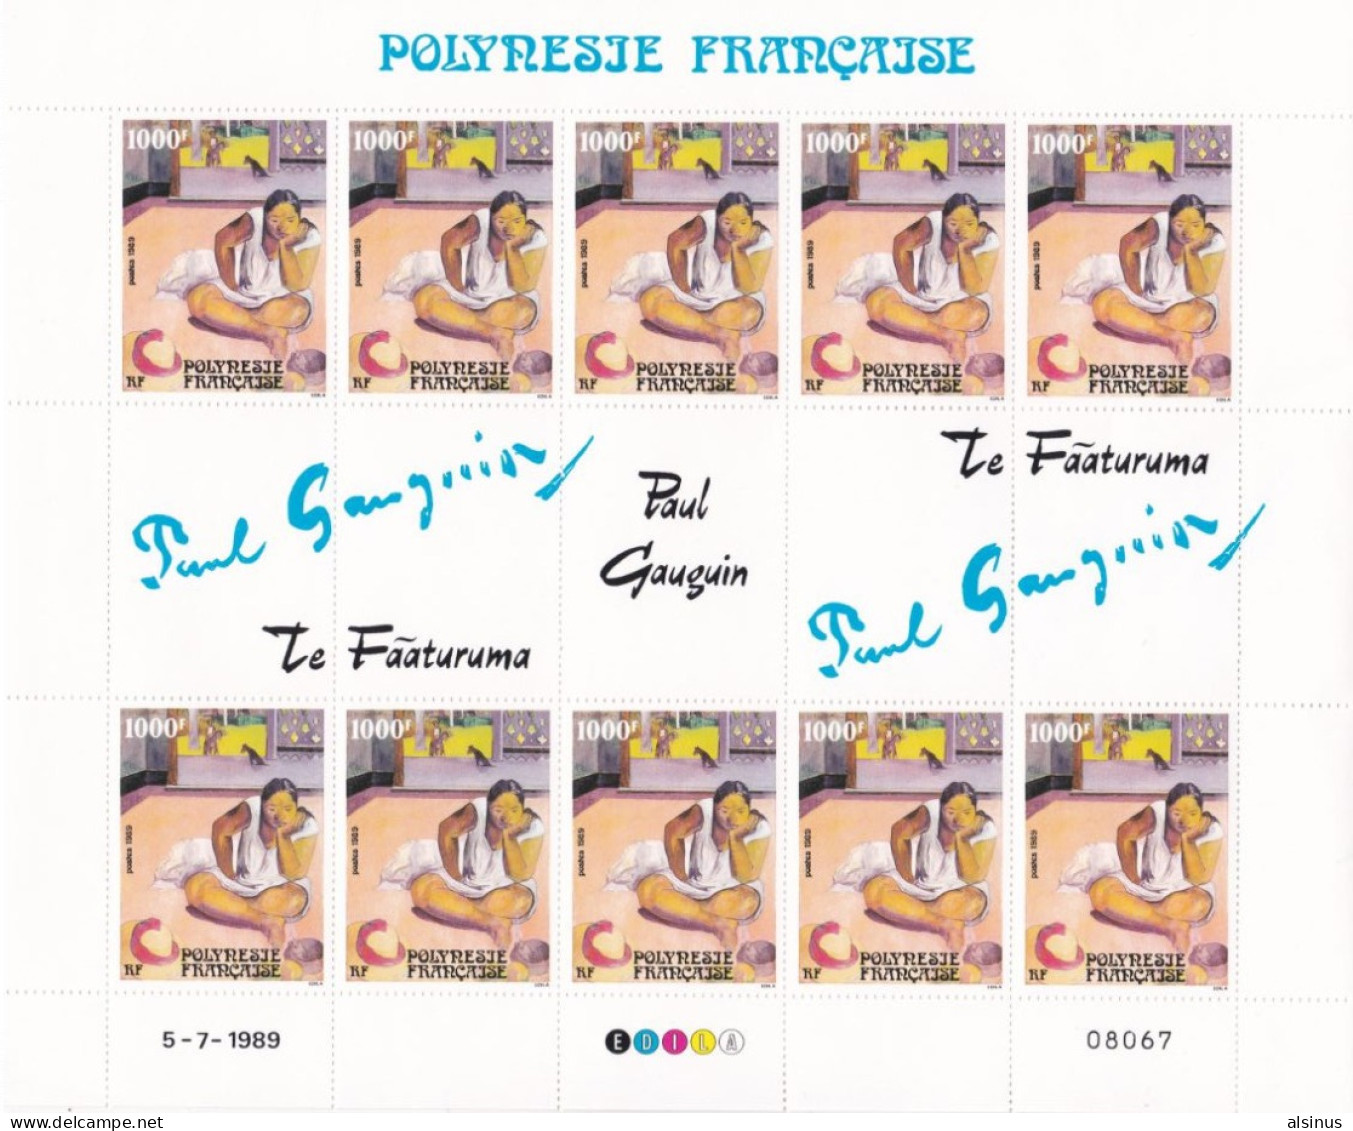 POLYNESIE FRANCAISE - 1989 - N° 346 MULTICOLORE - 1000 F -  PAUL GAUGUIN - PLANCHE COMPLETE DE 10 TIMBRES - ETAT NEUF - Unused Stamps